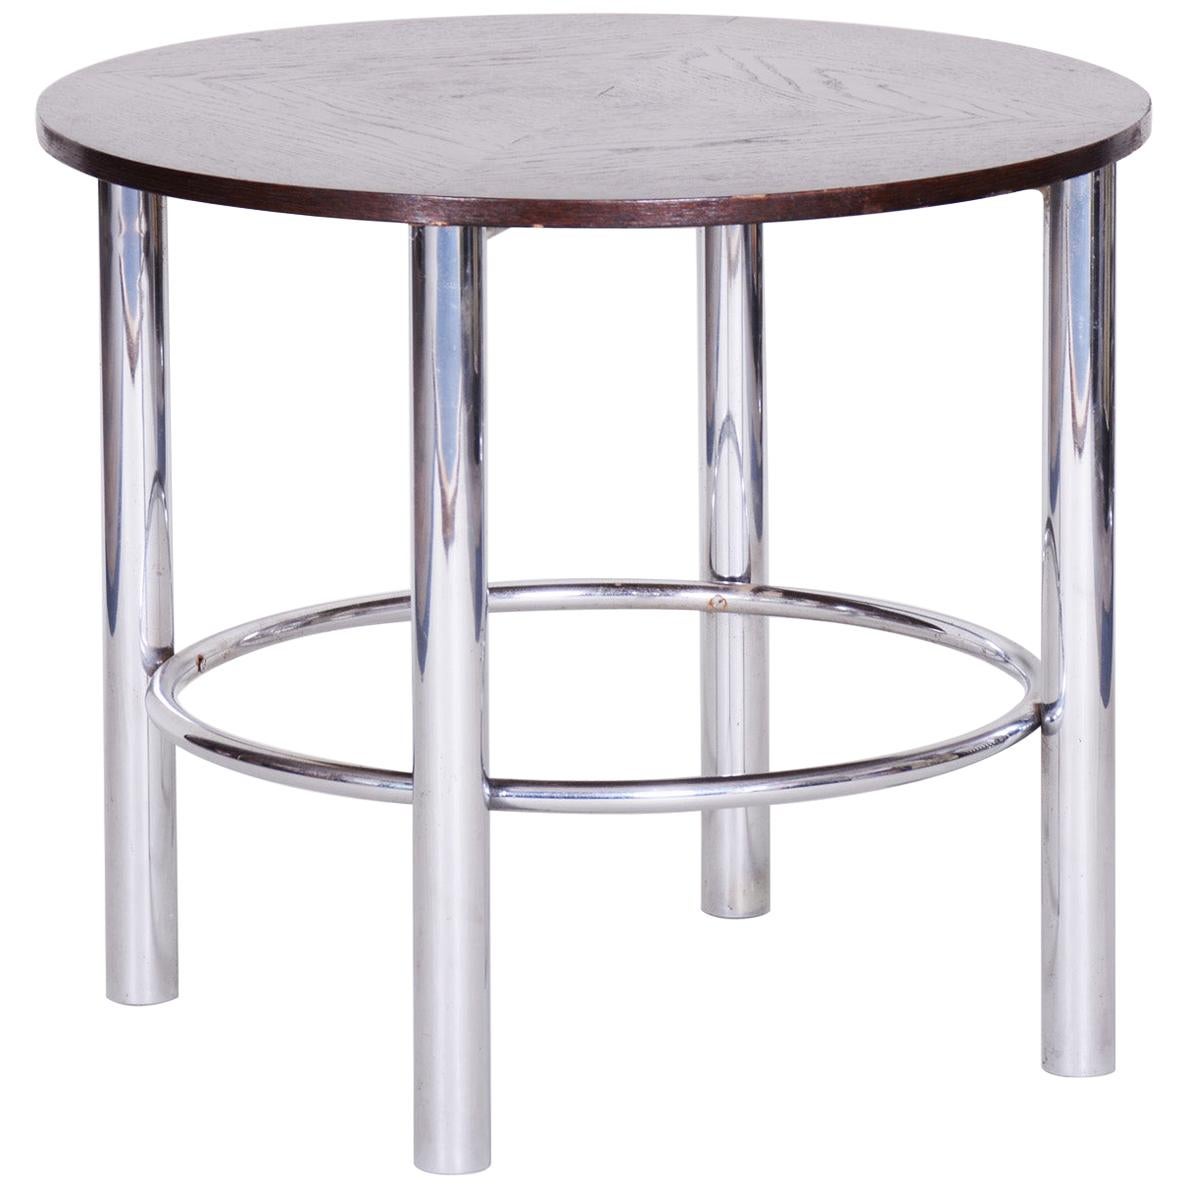 Restored Czech Round Oak Bauhaus Table by Mücke & Melder, Chrome, 1930s For Sale